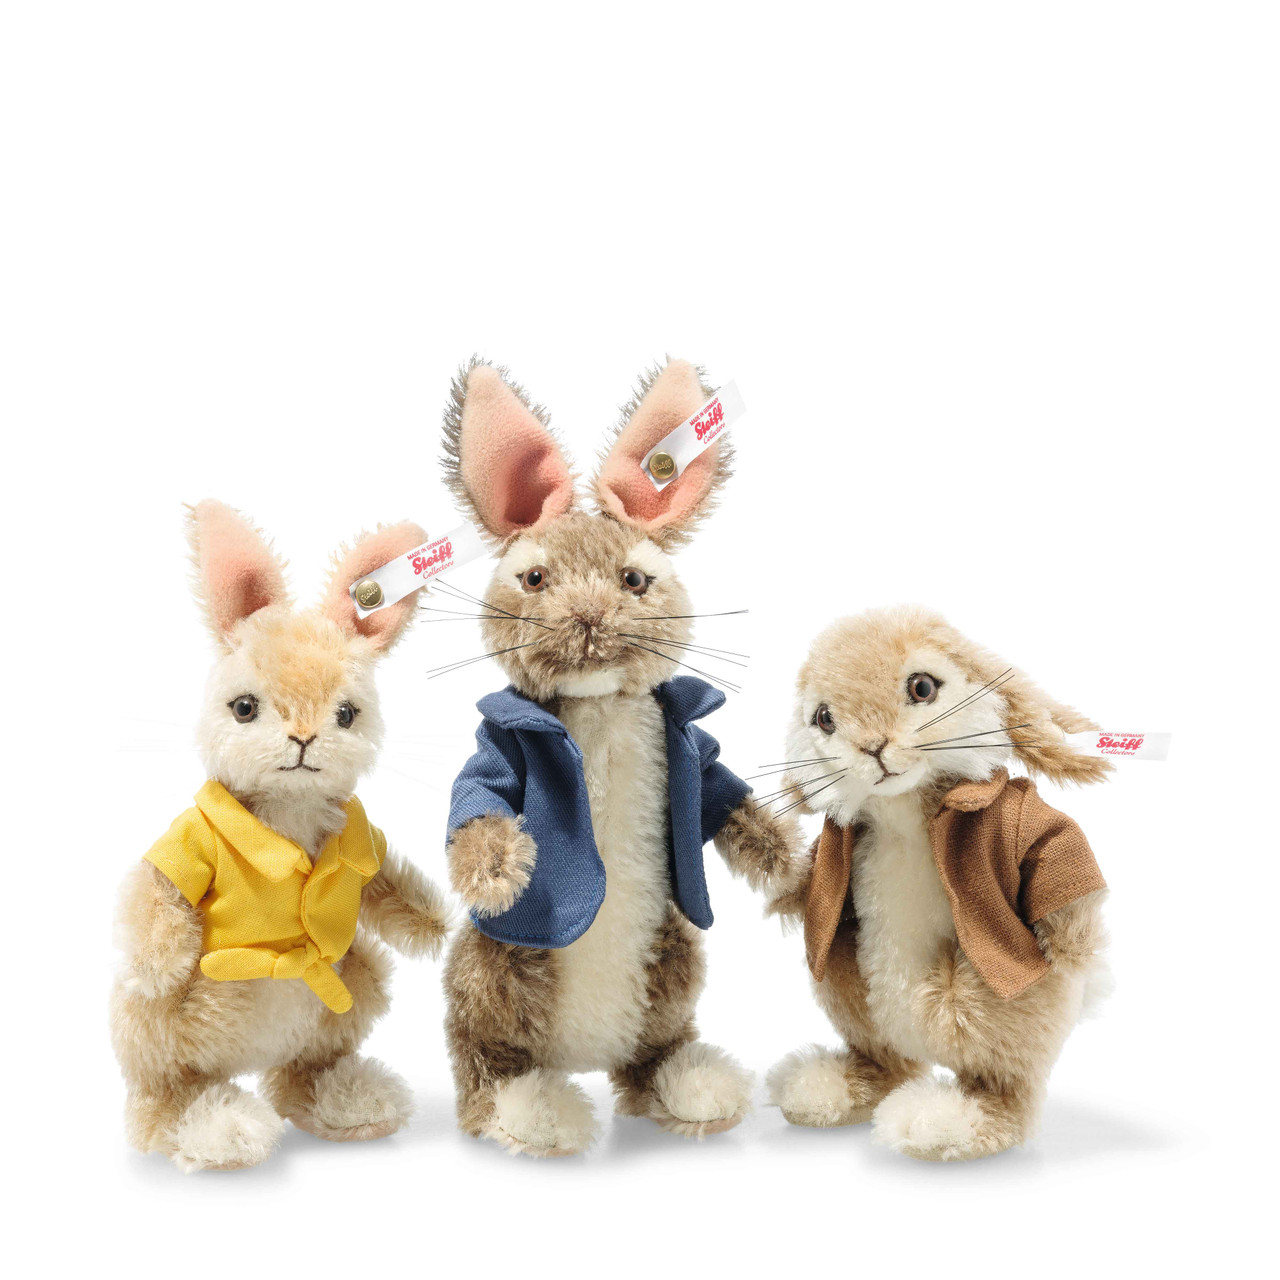 peter rabbit teddys